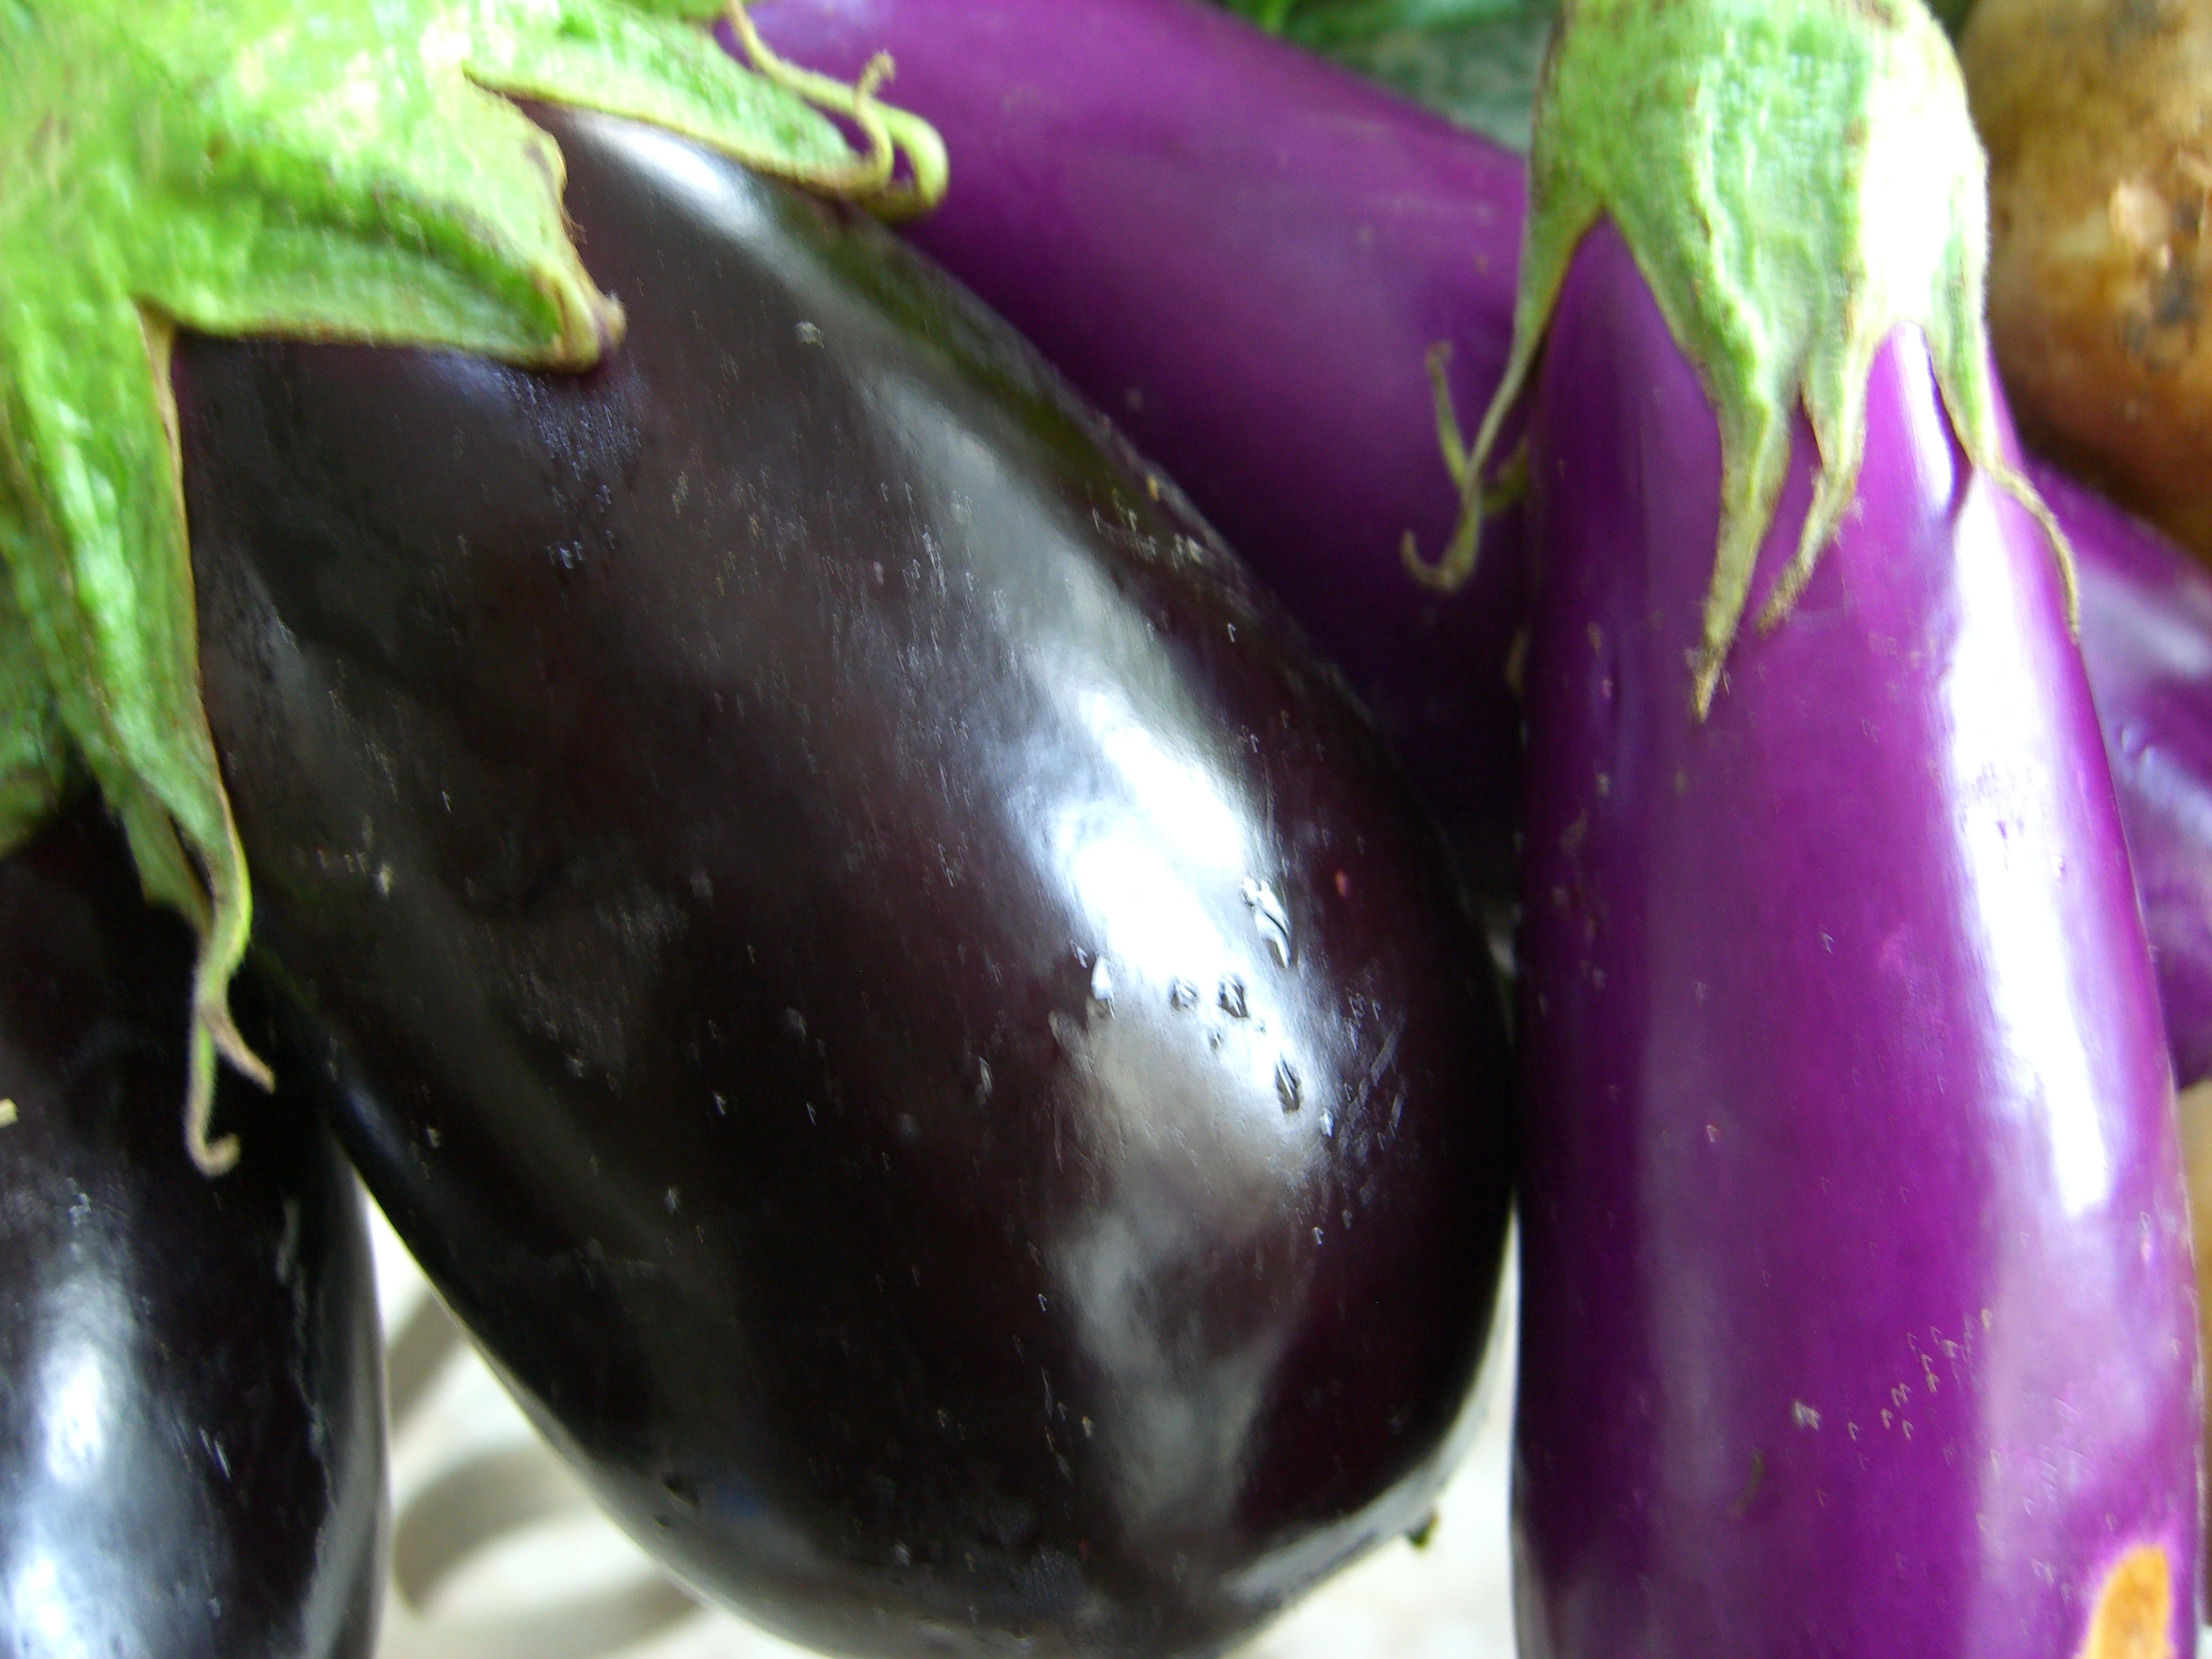 Friday Foodie Fix - Eggplant.